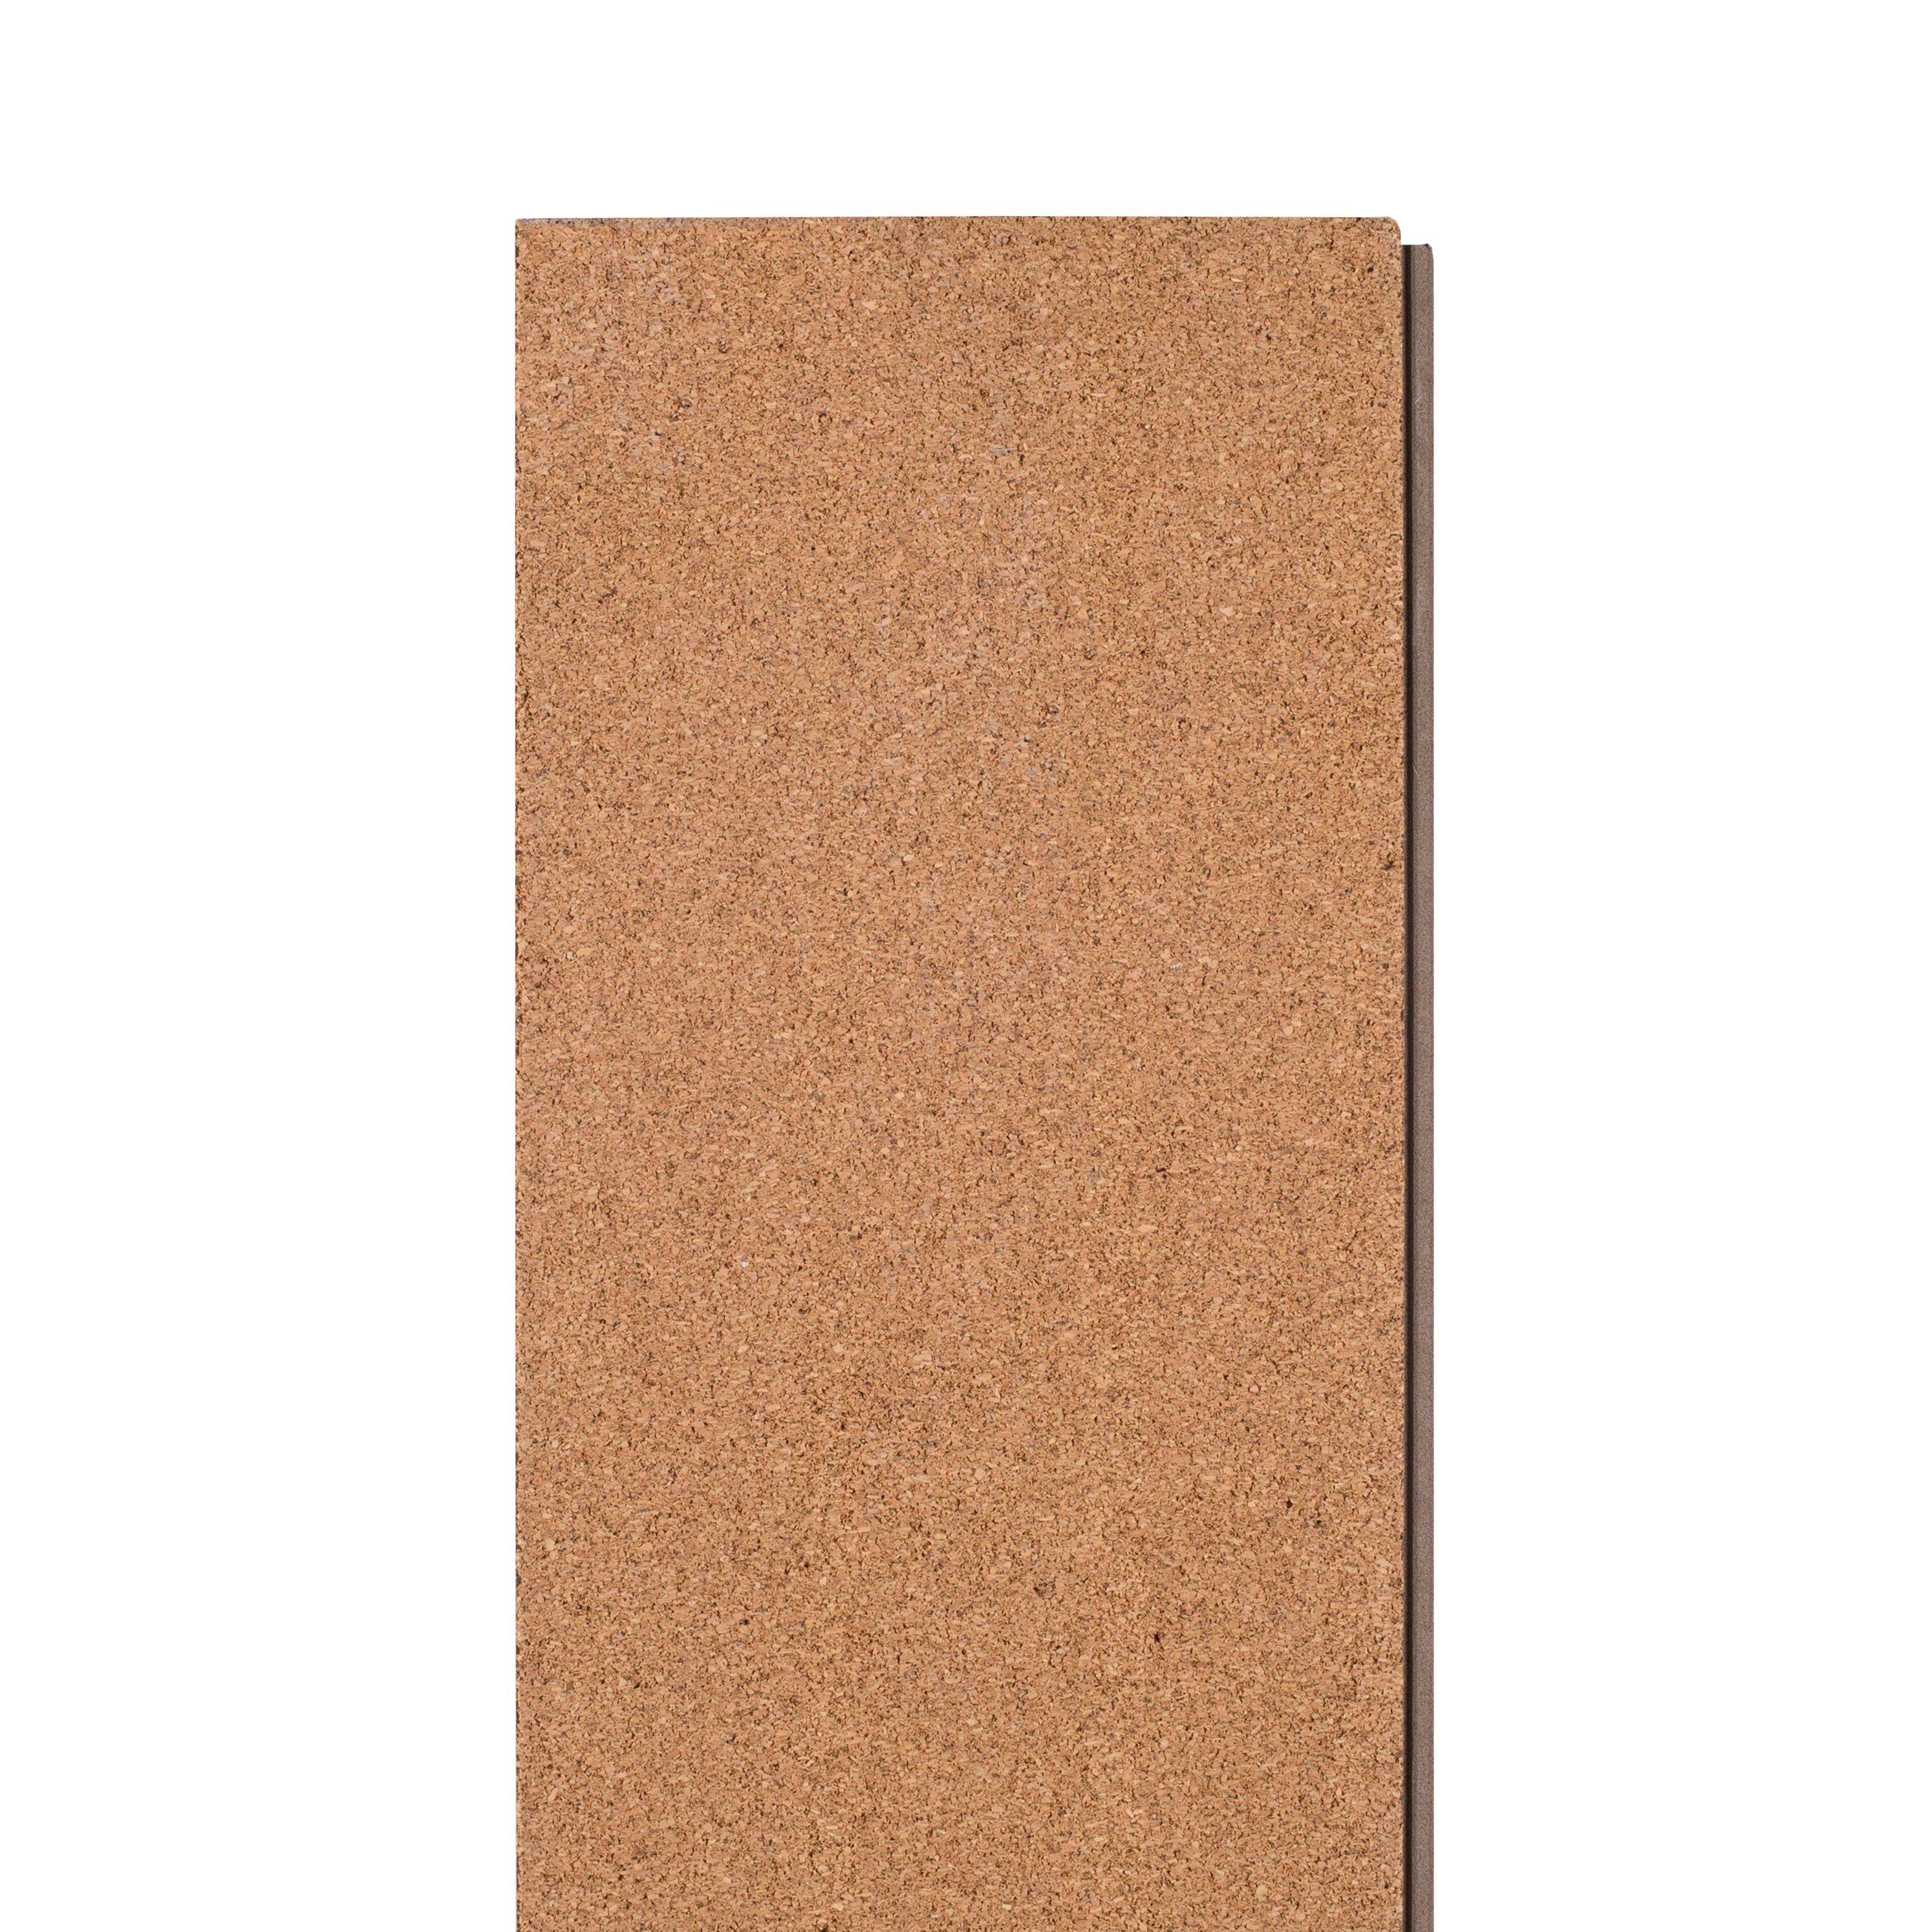 White Blossom Rigid Core Luxury Vinyl Plank - Cork Back